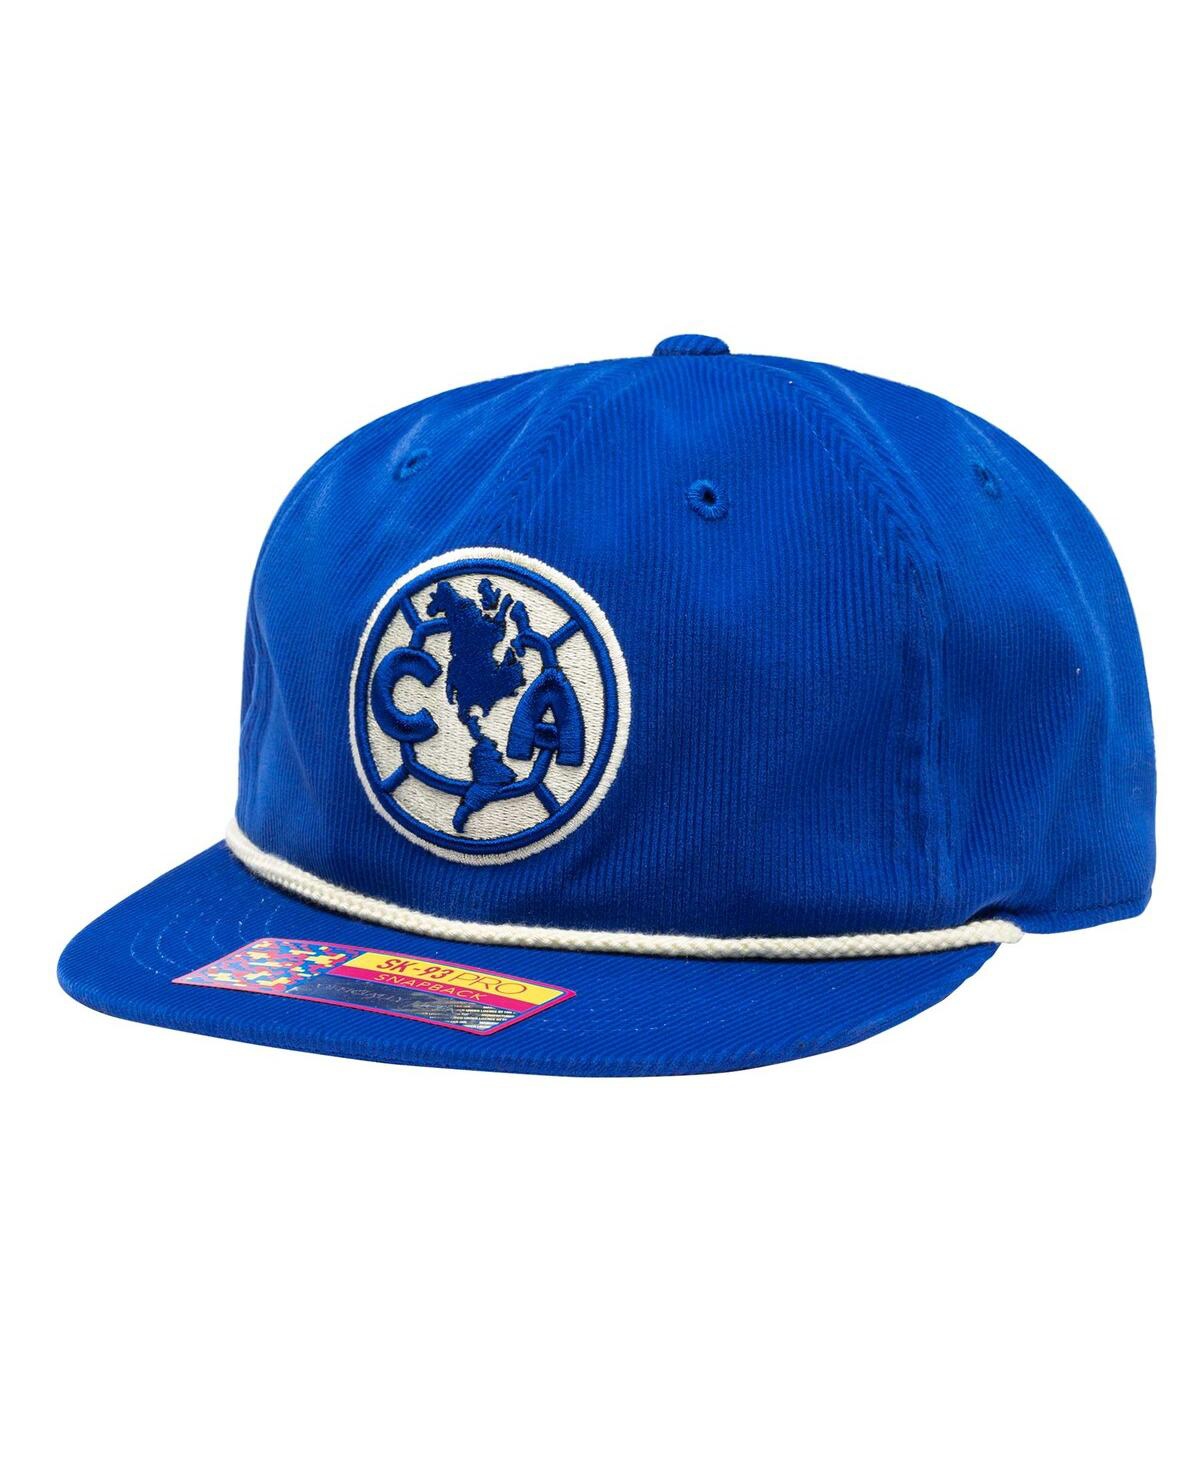 Shop Fan Ink Men's Blue Club America Snow Beach Adjustable Hat